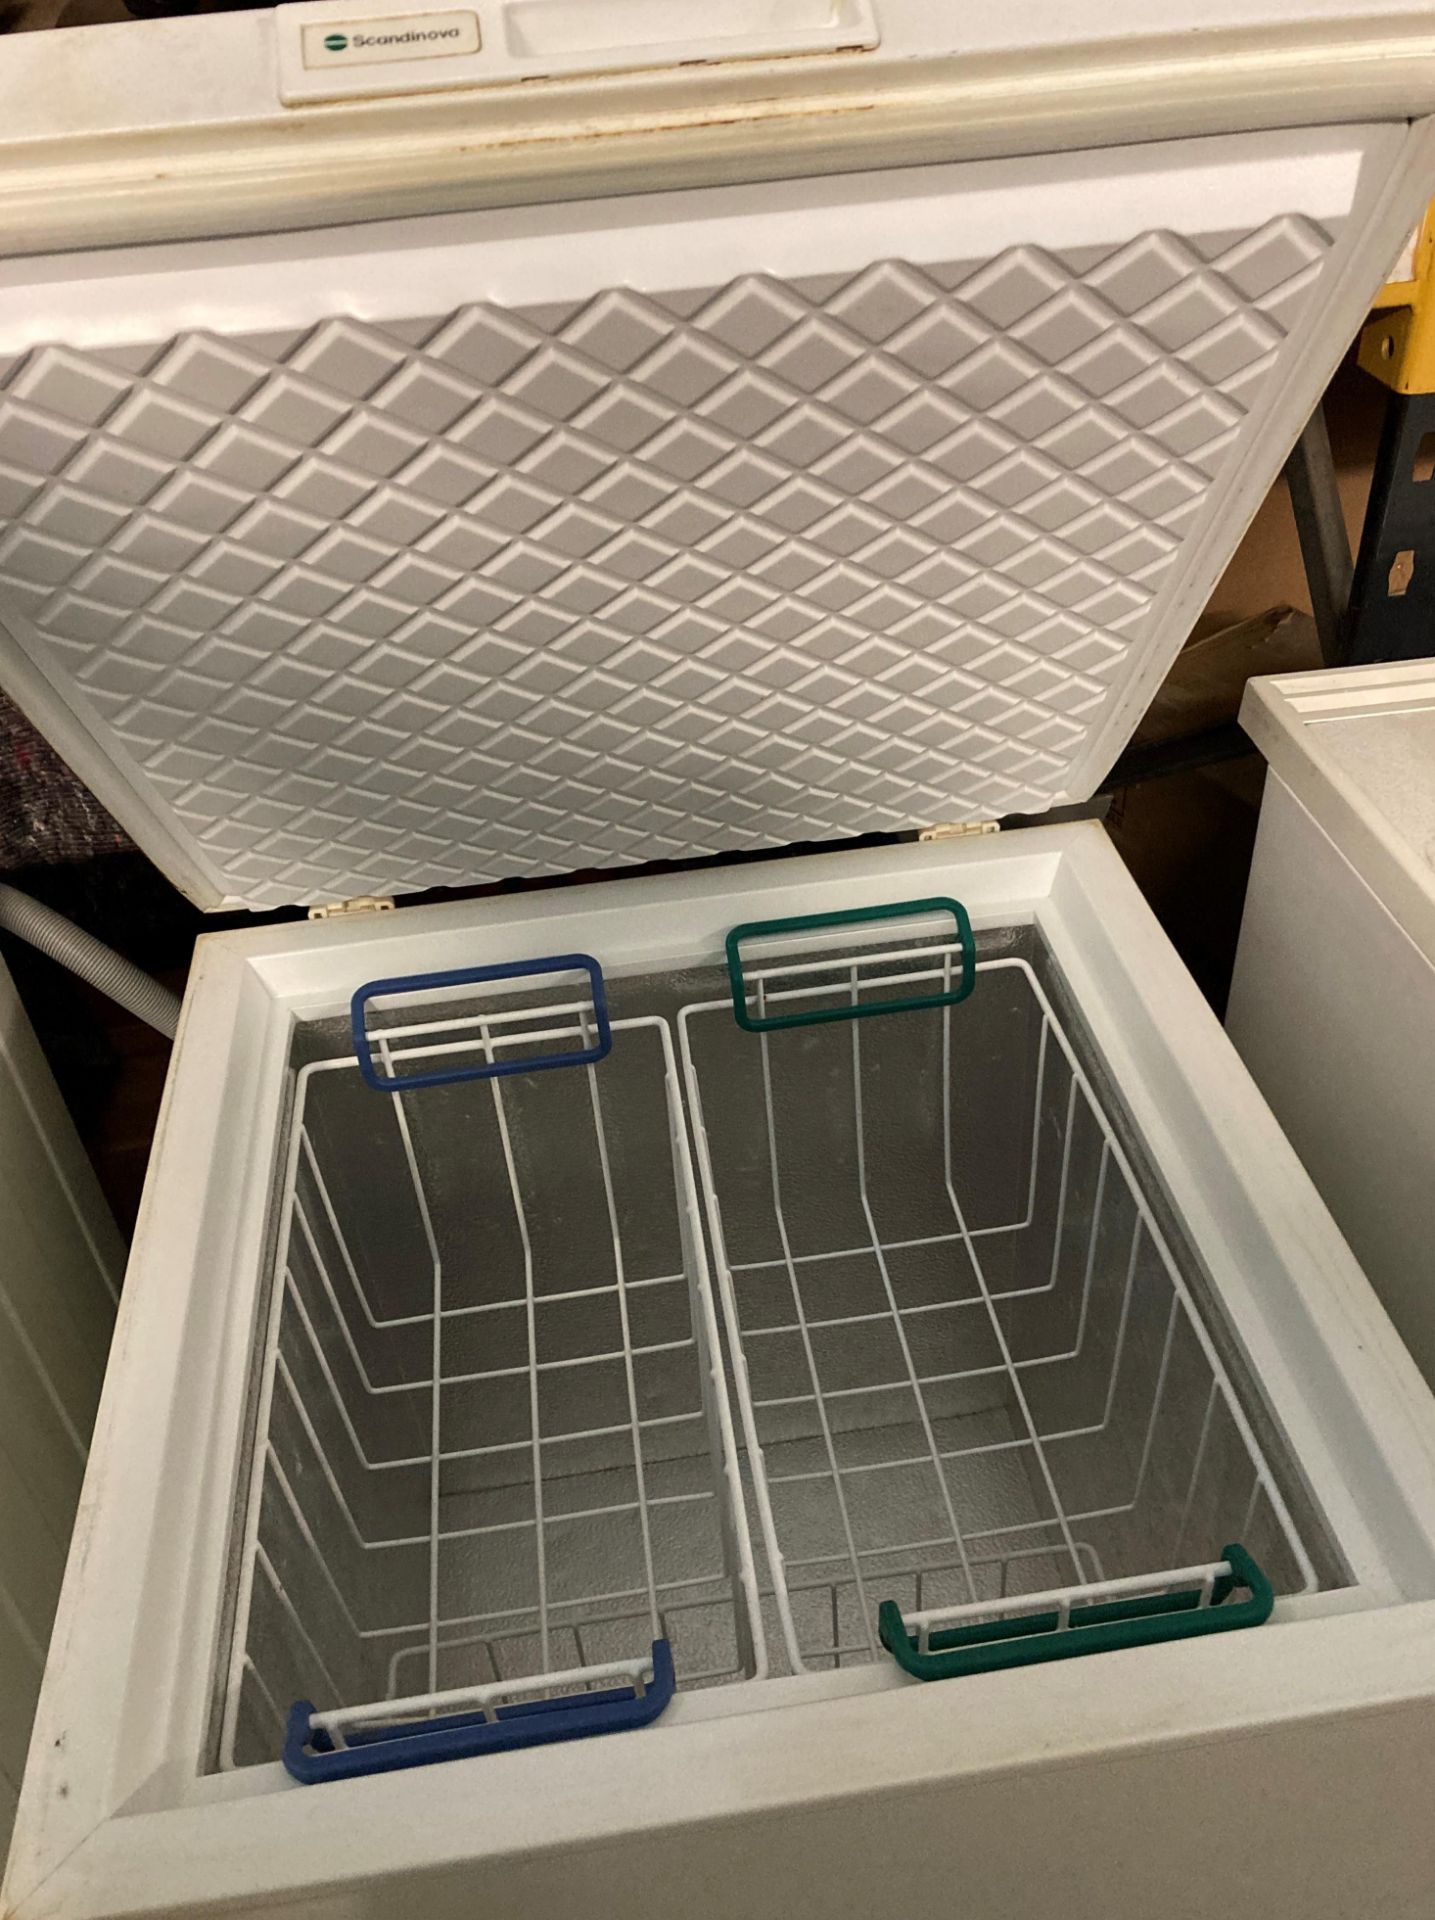 Scandinova small chest freezer complete with two storage baskets (saleroom location: PO) - Image 2 of 2